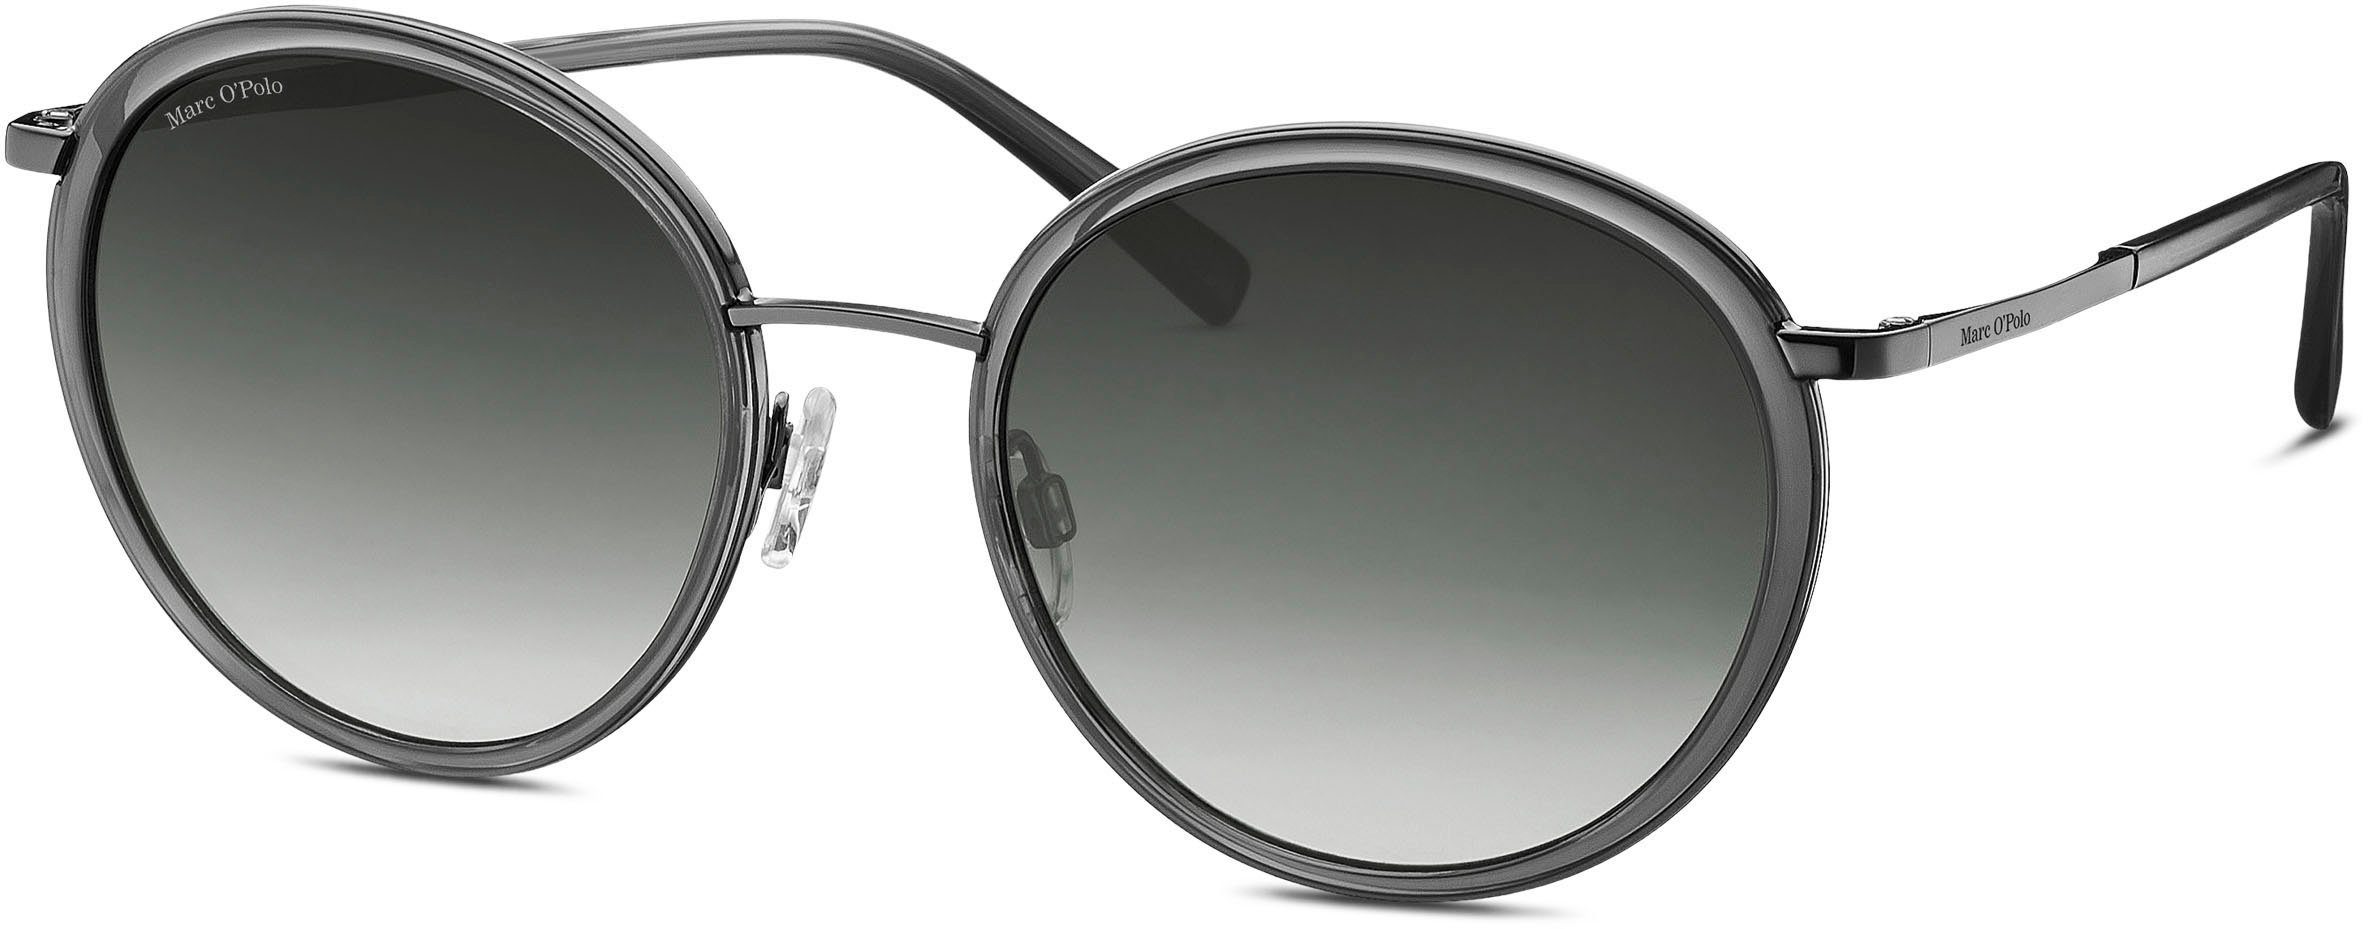 Sonnenbrille 505109 Modell Marc grau O'Polo Panto-Form